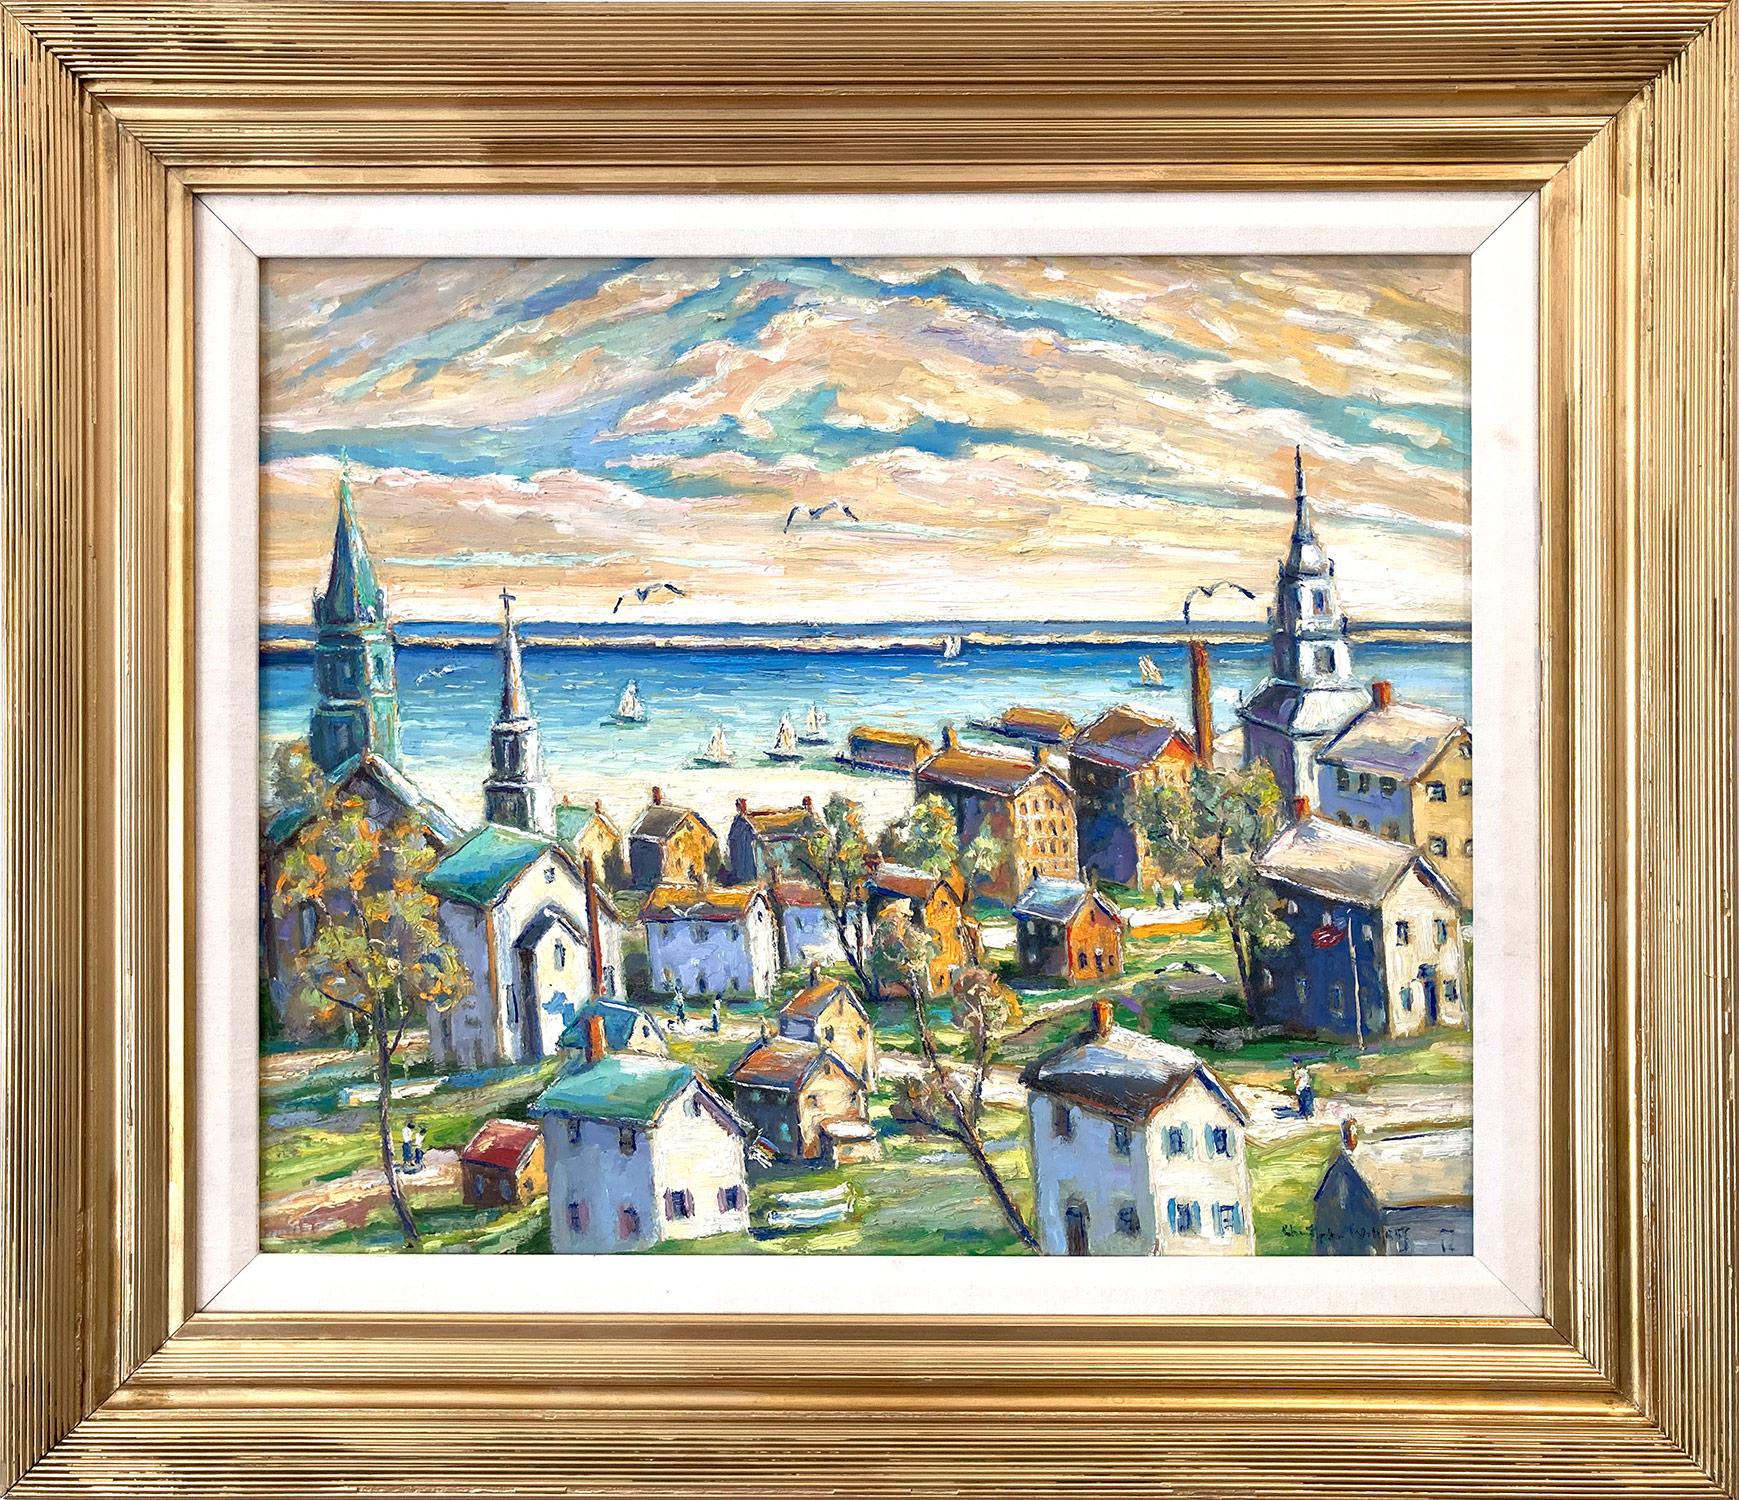 Christopher Willett Landscape Painting - "Provincetown, Massachusetts" Pastoral Summer Landscape Oil Painting Ocean View